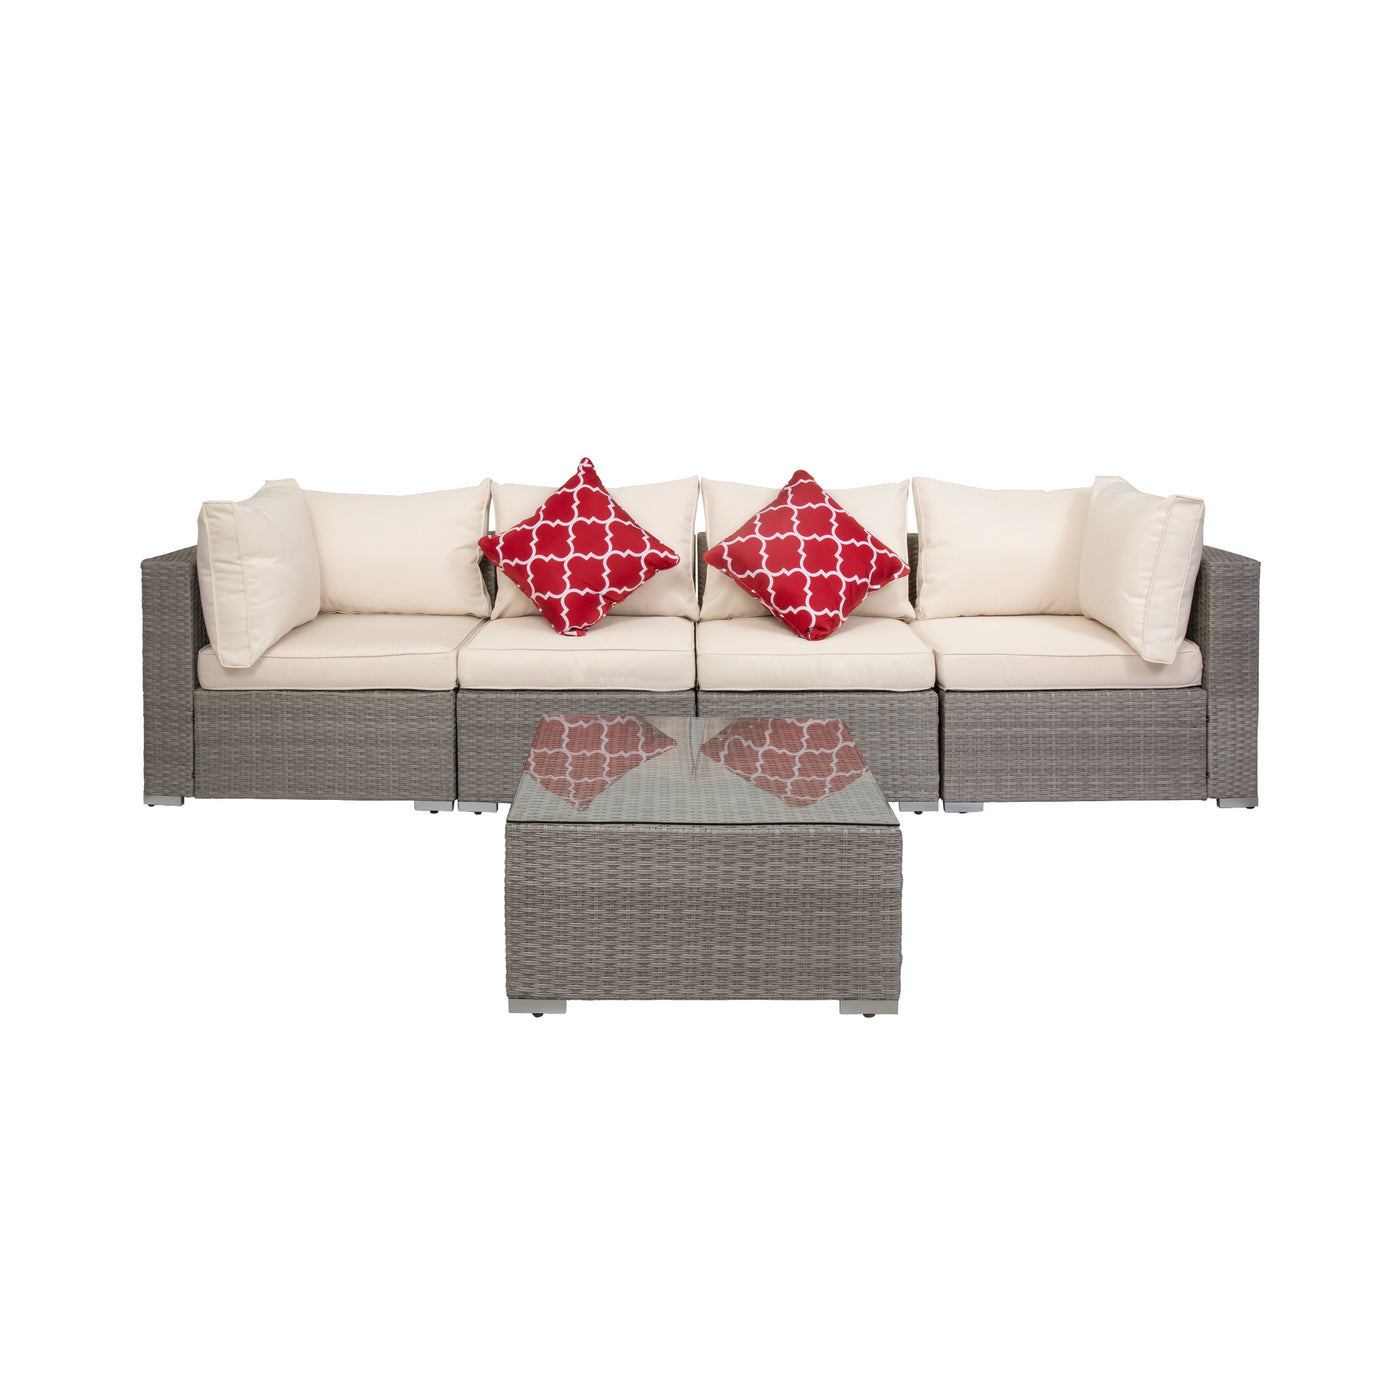 Irvine 5-Piece Outdoor Patio Rattan Wicker Sofa with Coffee Table Set